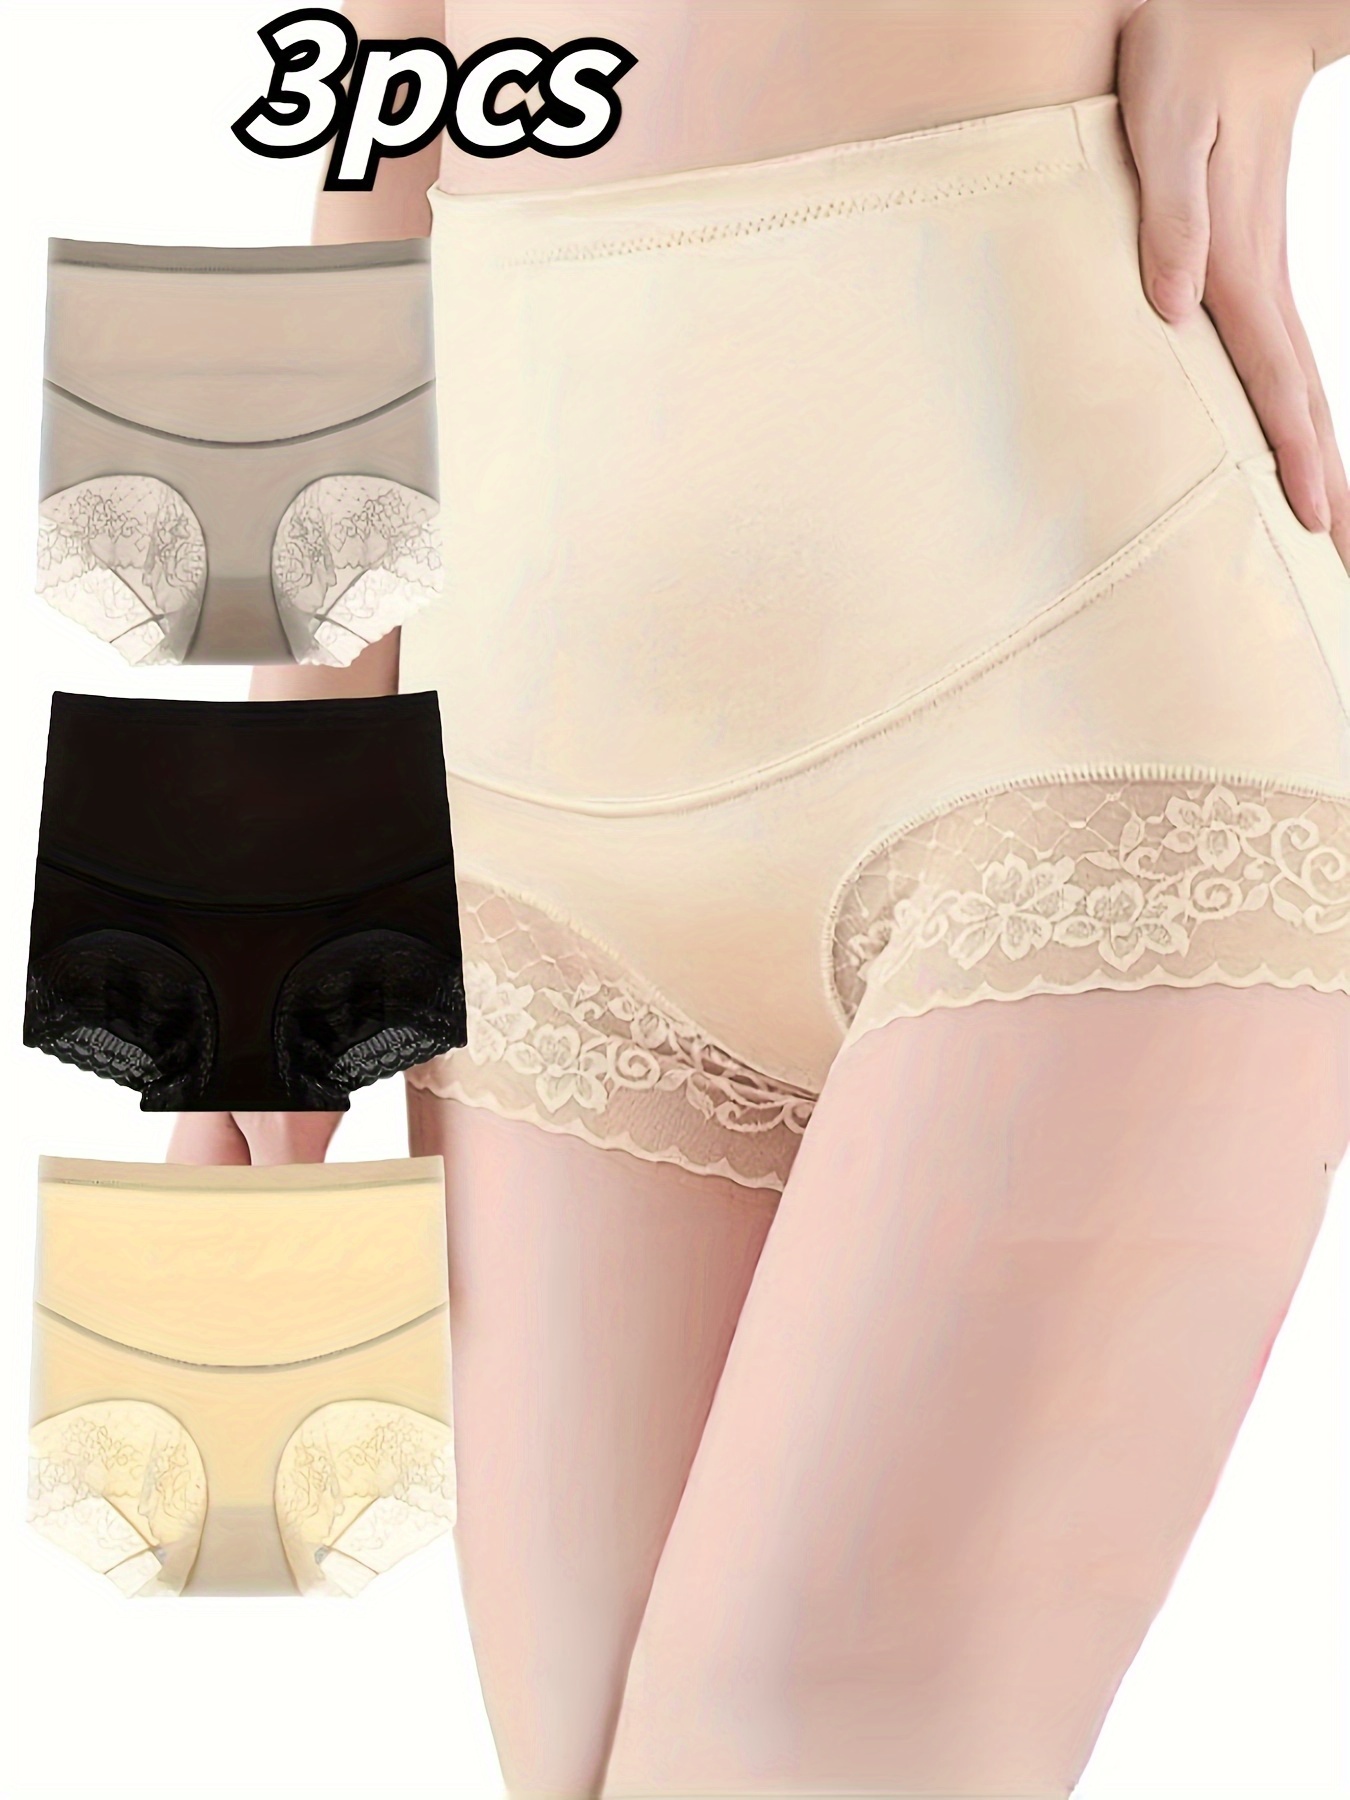 SCARBORO Adjustable Shaping Panties, Lace Trim High Waist Tummy Control  Butt Lifter Slim Shorts, Women's Underwear & Shapewear